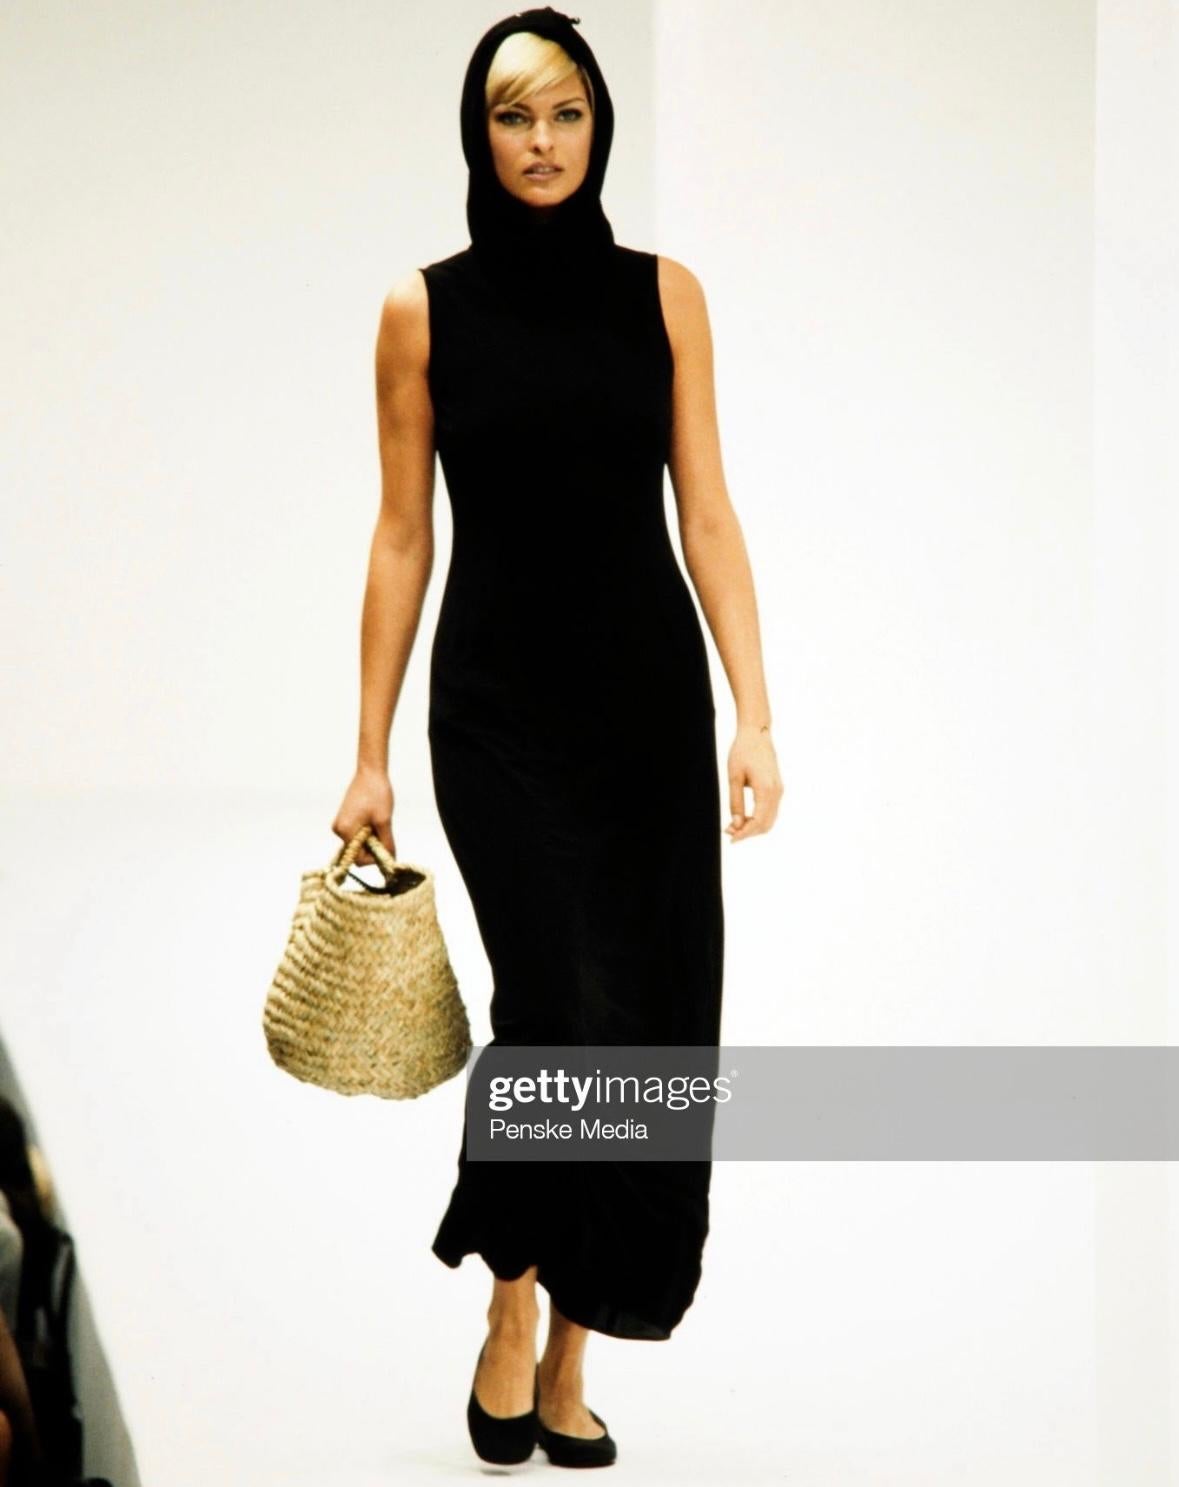 Women's S/S 1996 Dolce & Gabbana Runway Hooded Stretch Black High Slit Dress For Sale